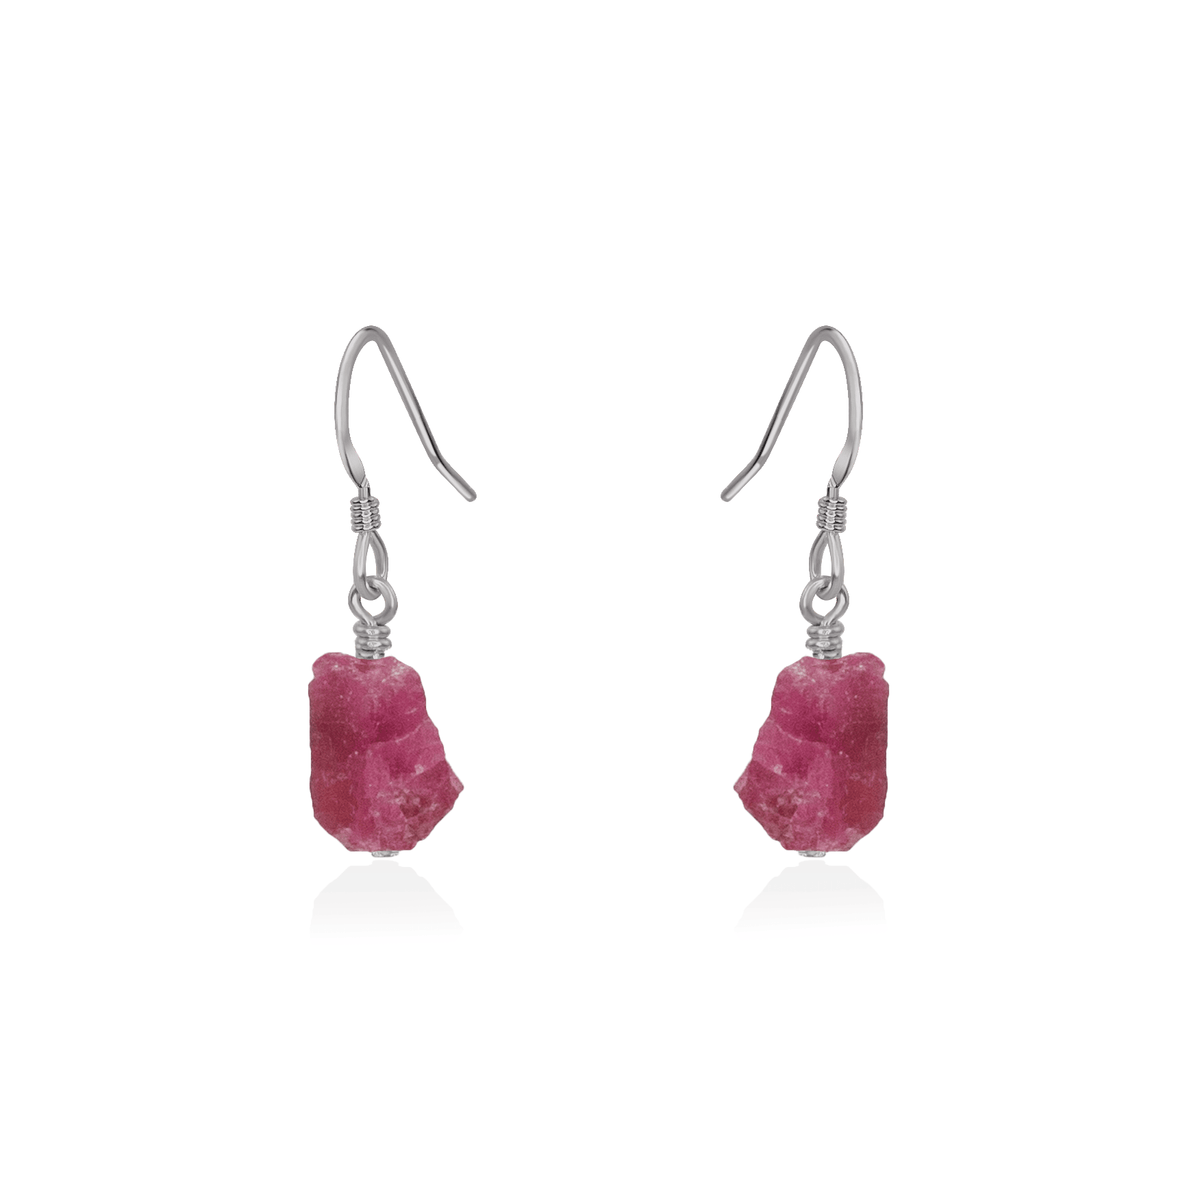 Raw Pink Tourmaline Crystal Dangle Drop Earrings - Raw Pink Tourmaline Crystal Dangle Drop Earrings - Stainless Steel - Luna Tide Handmade Crystal Jewellery